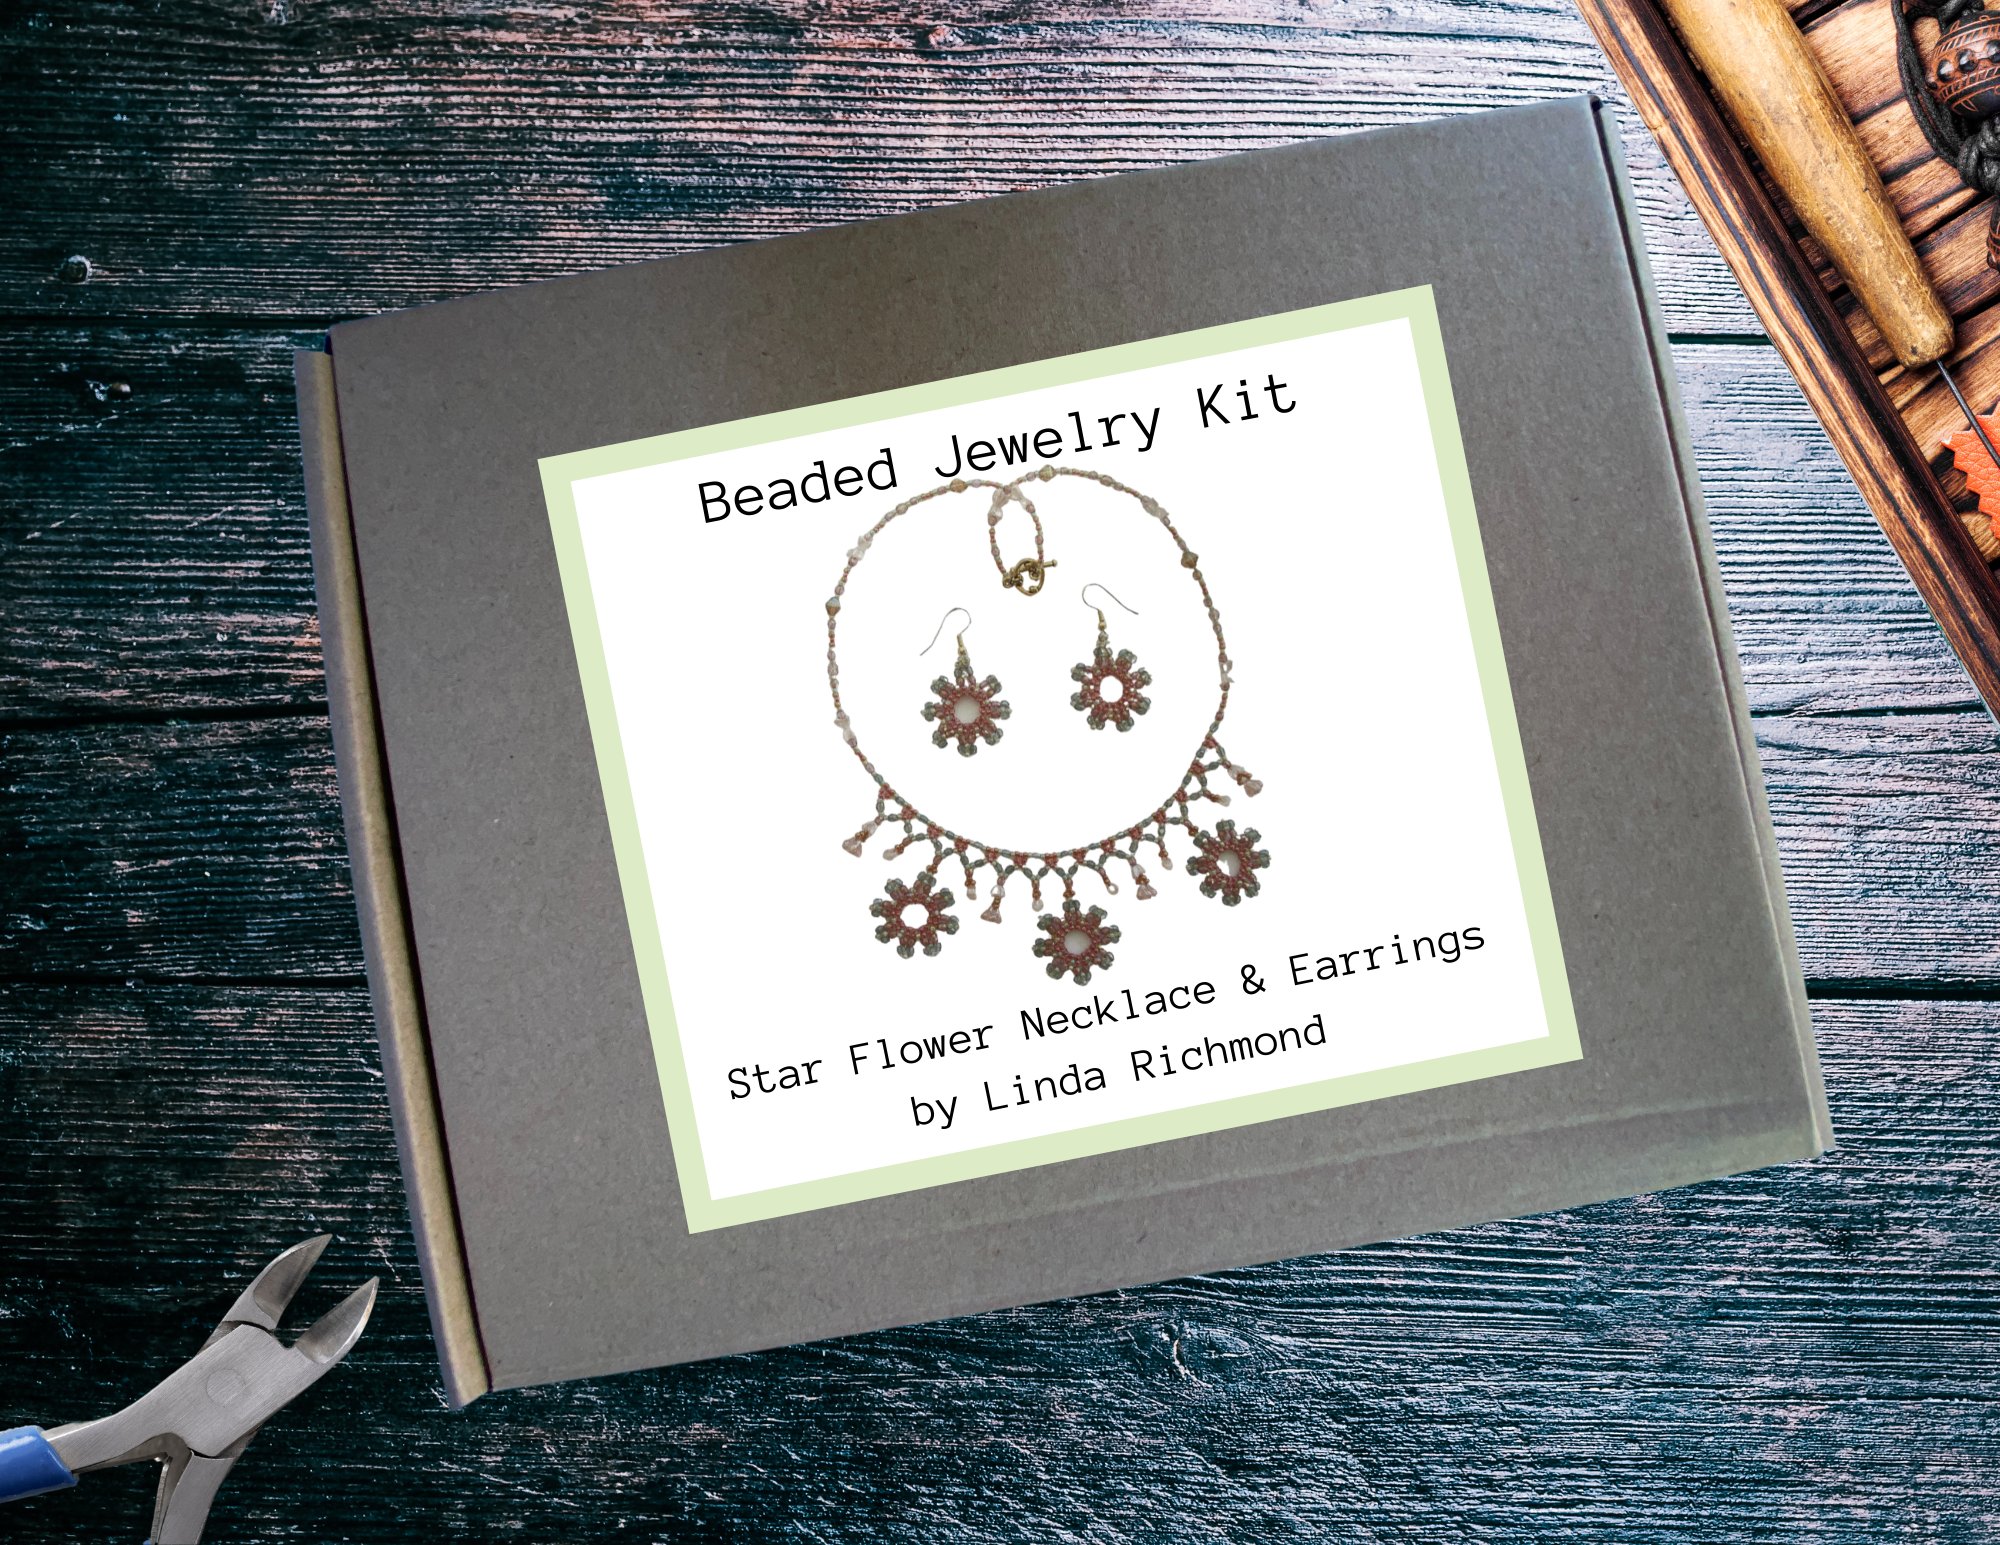 Beaded Jewelry Kit: Star Flower Necklace & Earrings by Linda Richmond